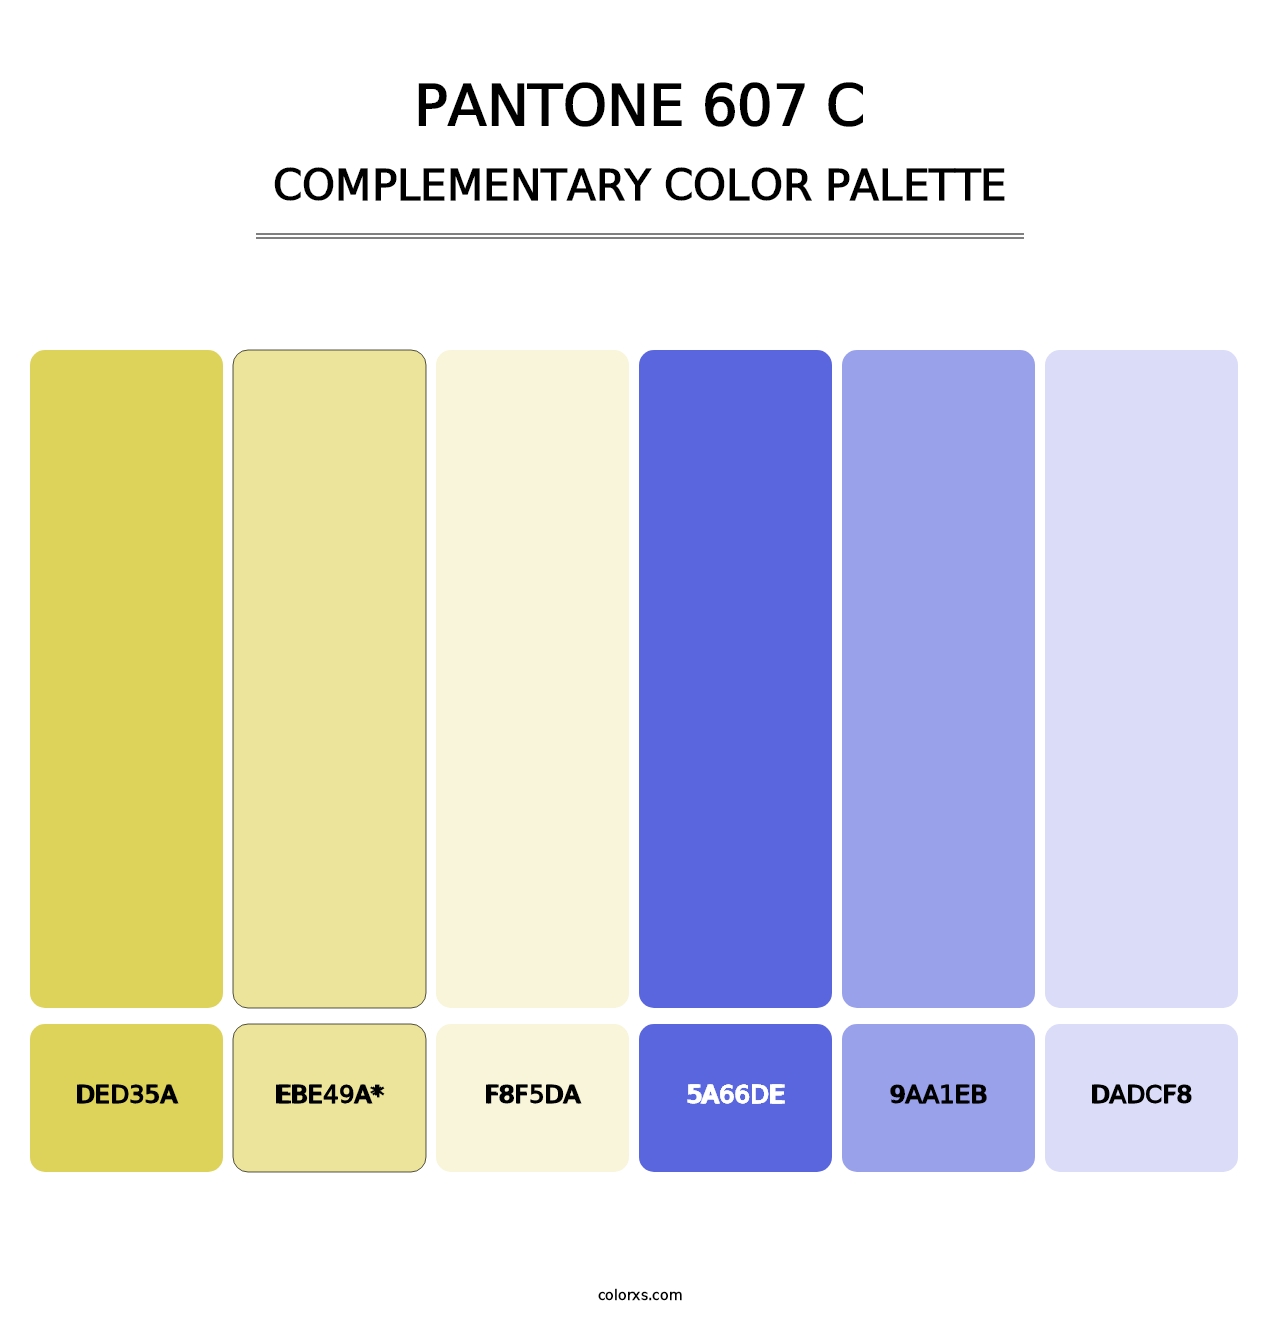 PANTONE 607 C - Complementary Color Palette